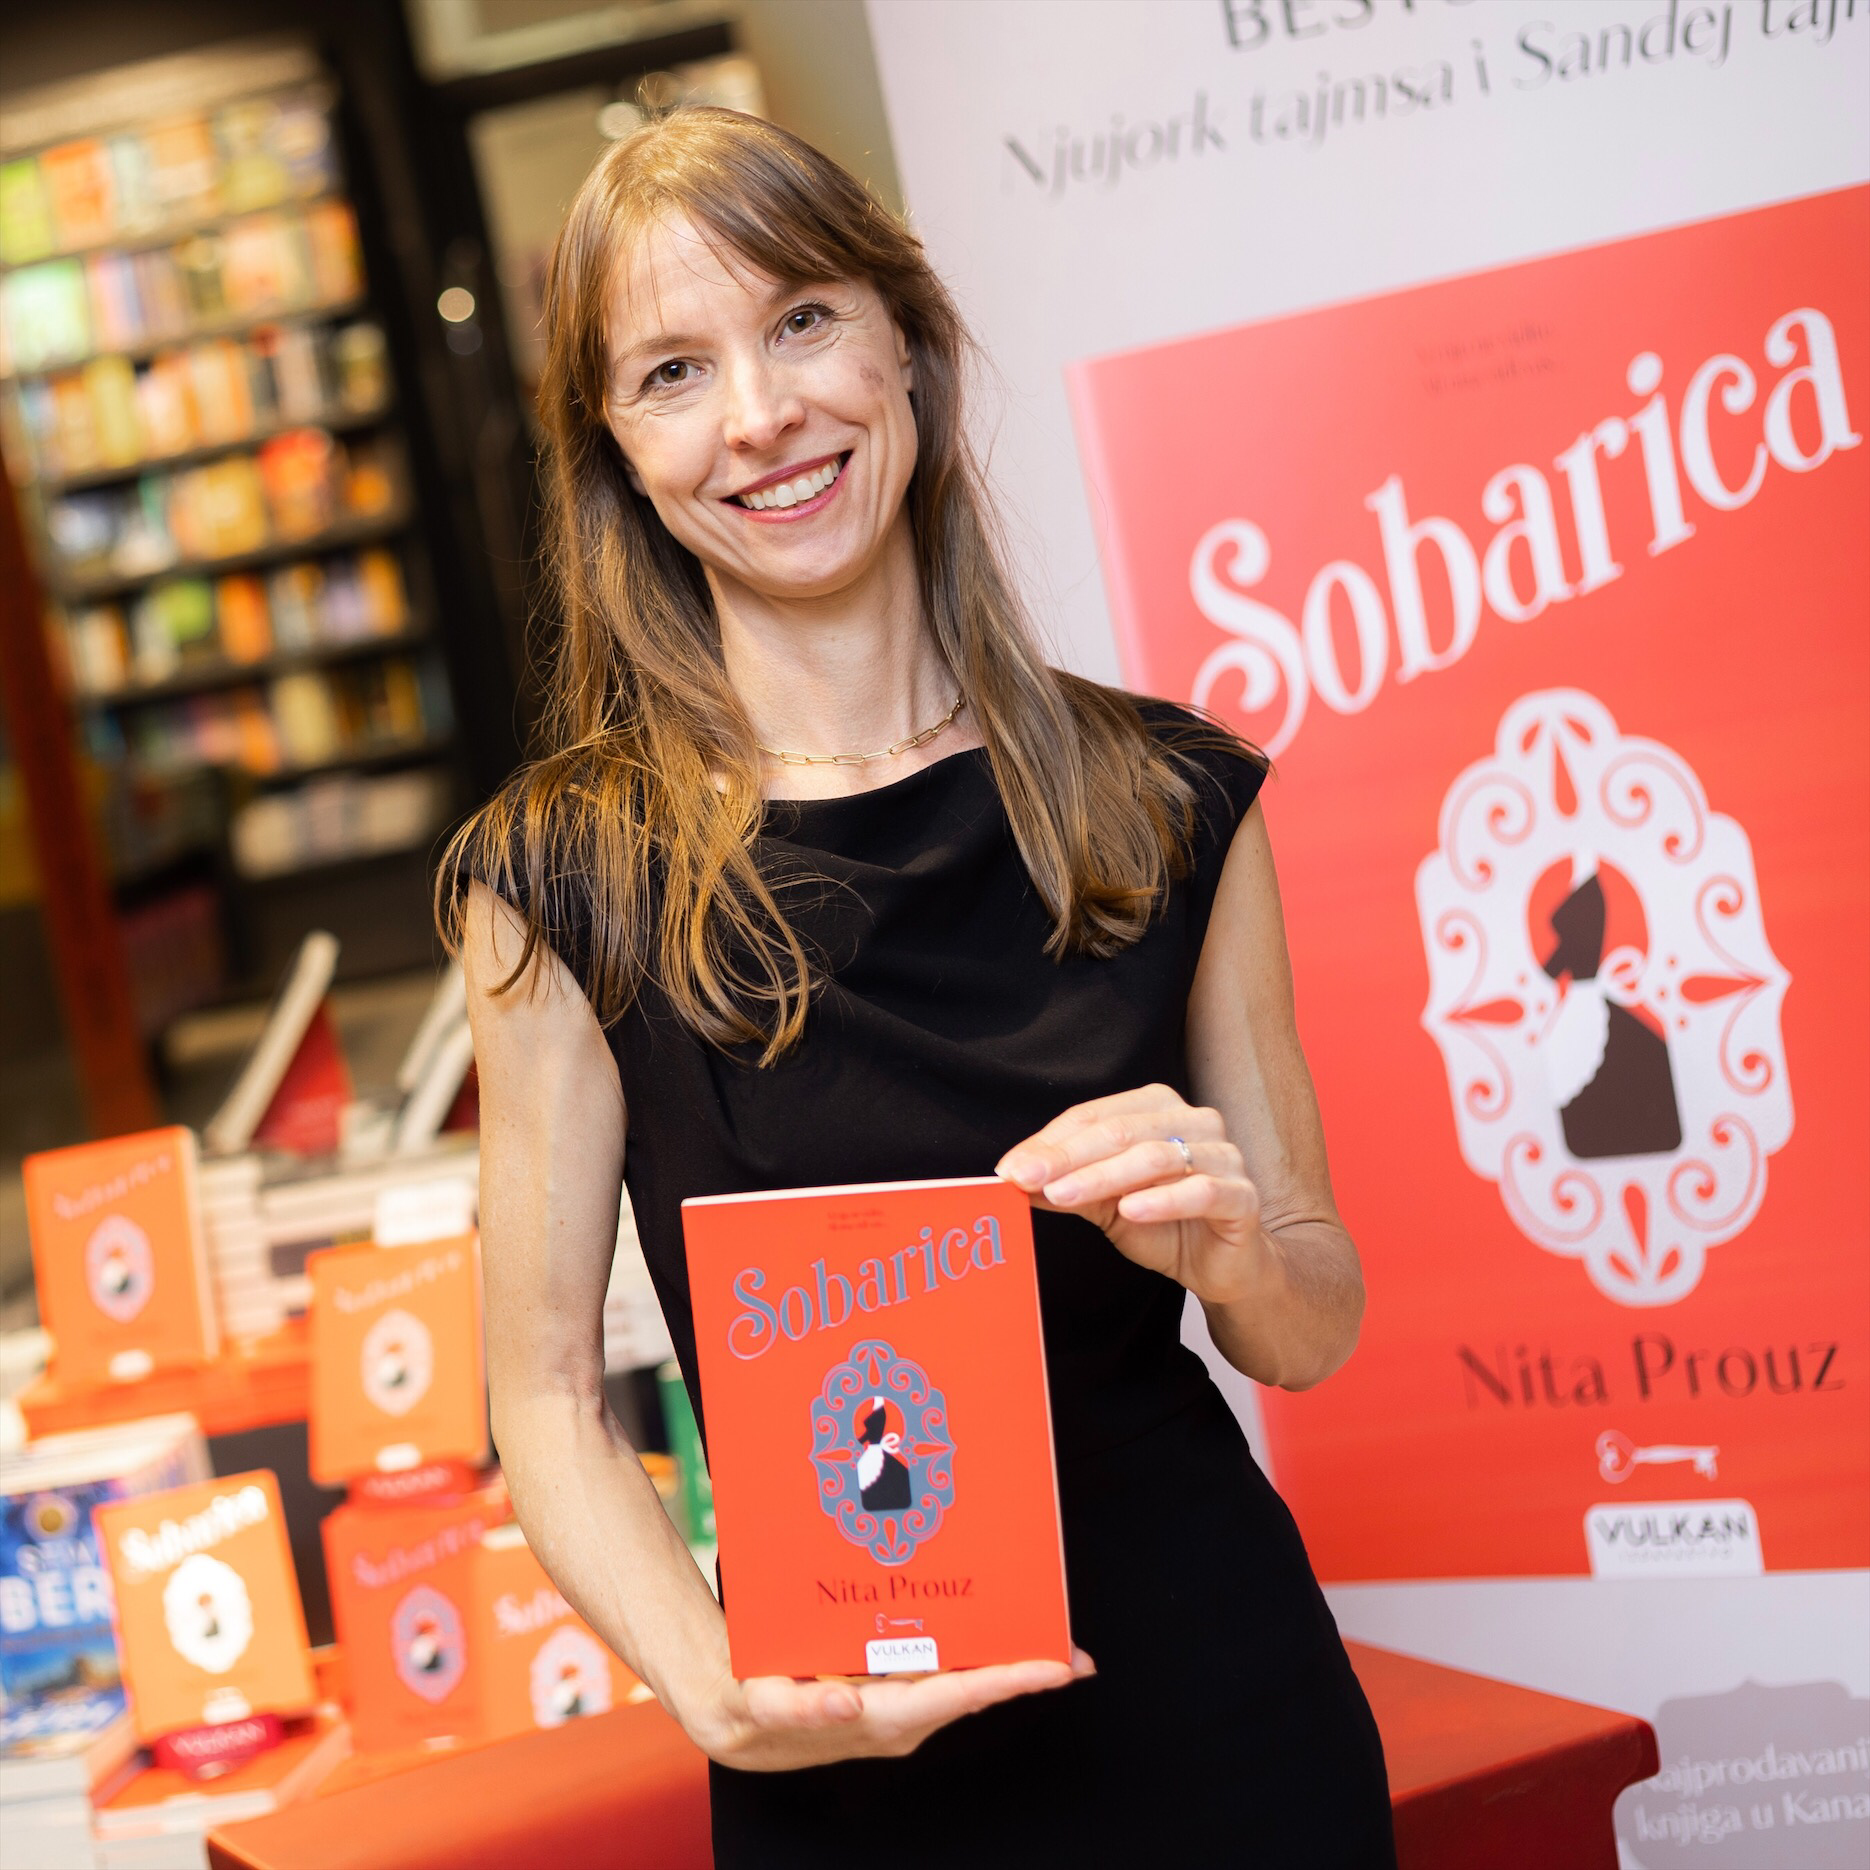 Kanadska književnica Nita Prouz oduševila prisutne na promociji knjige „Sobarica“